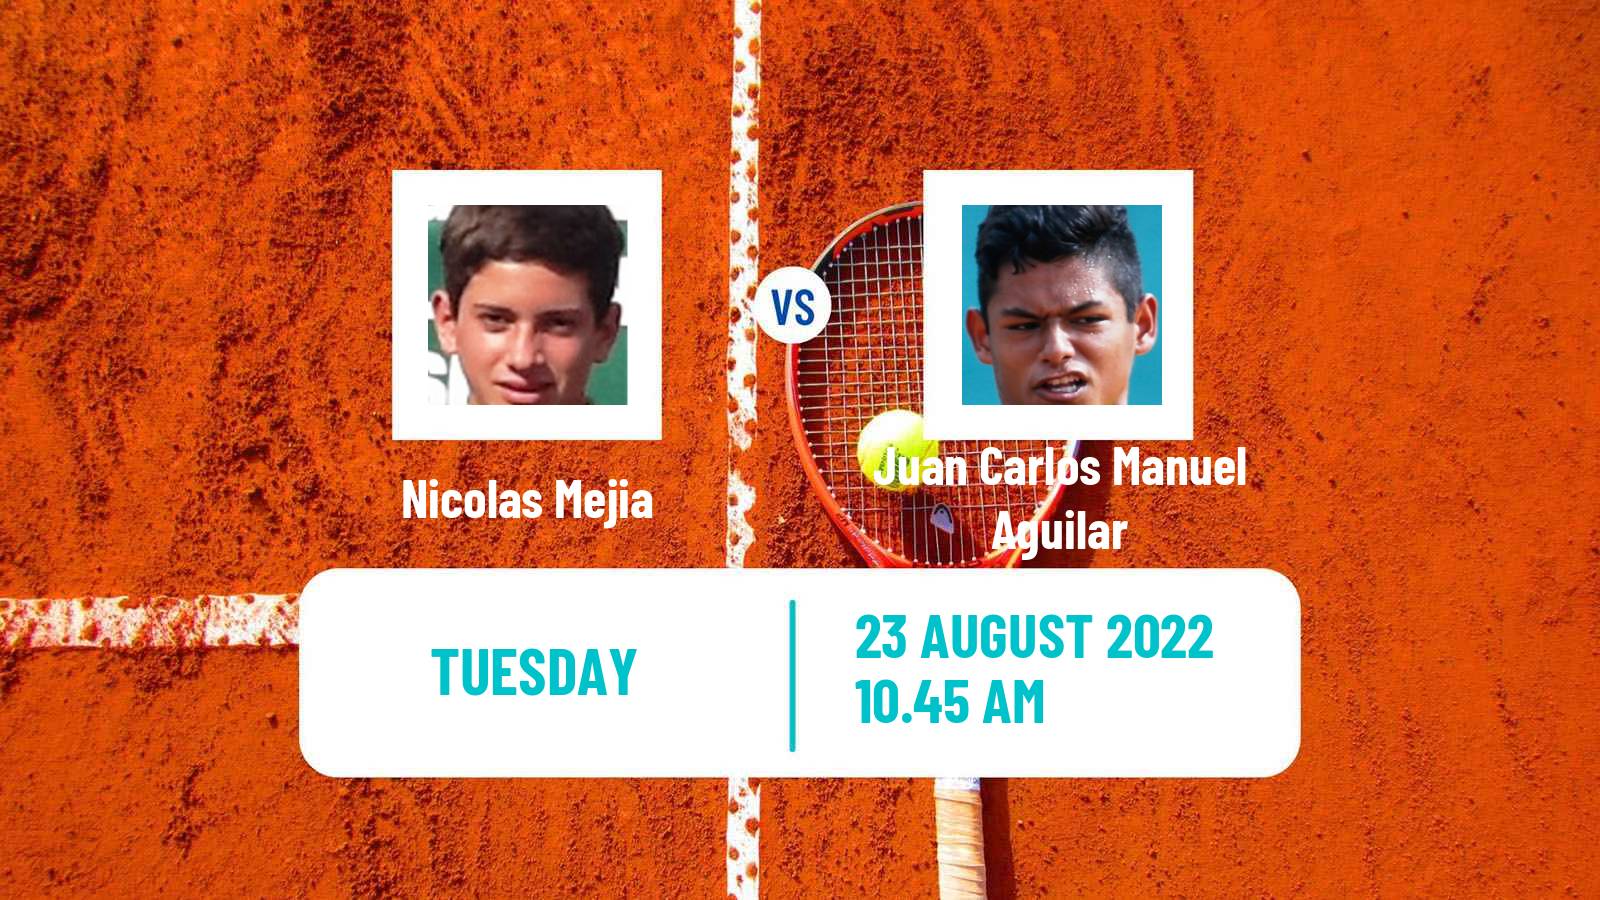 Tennis ATP Challenger Nicolas Mejia - Juan Carlos Manuel Aguilar